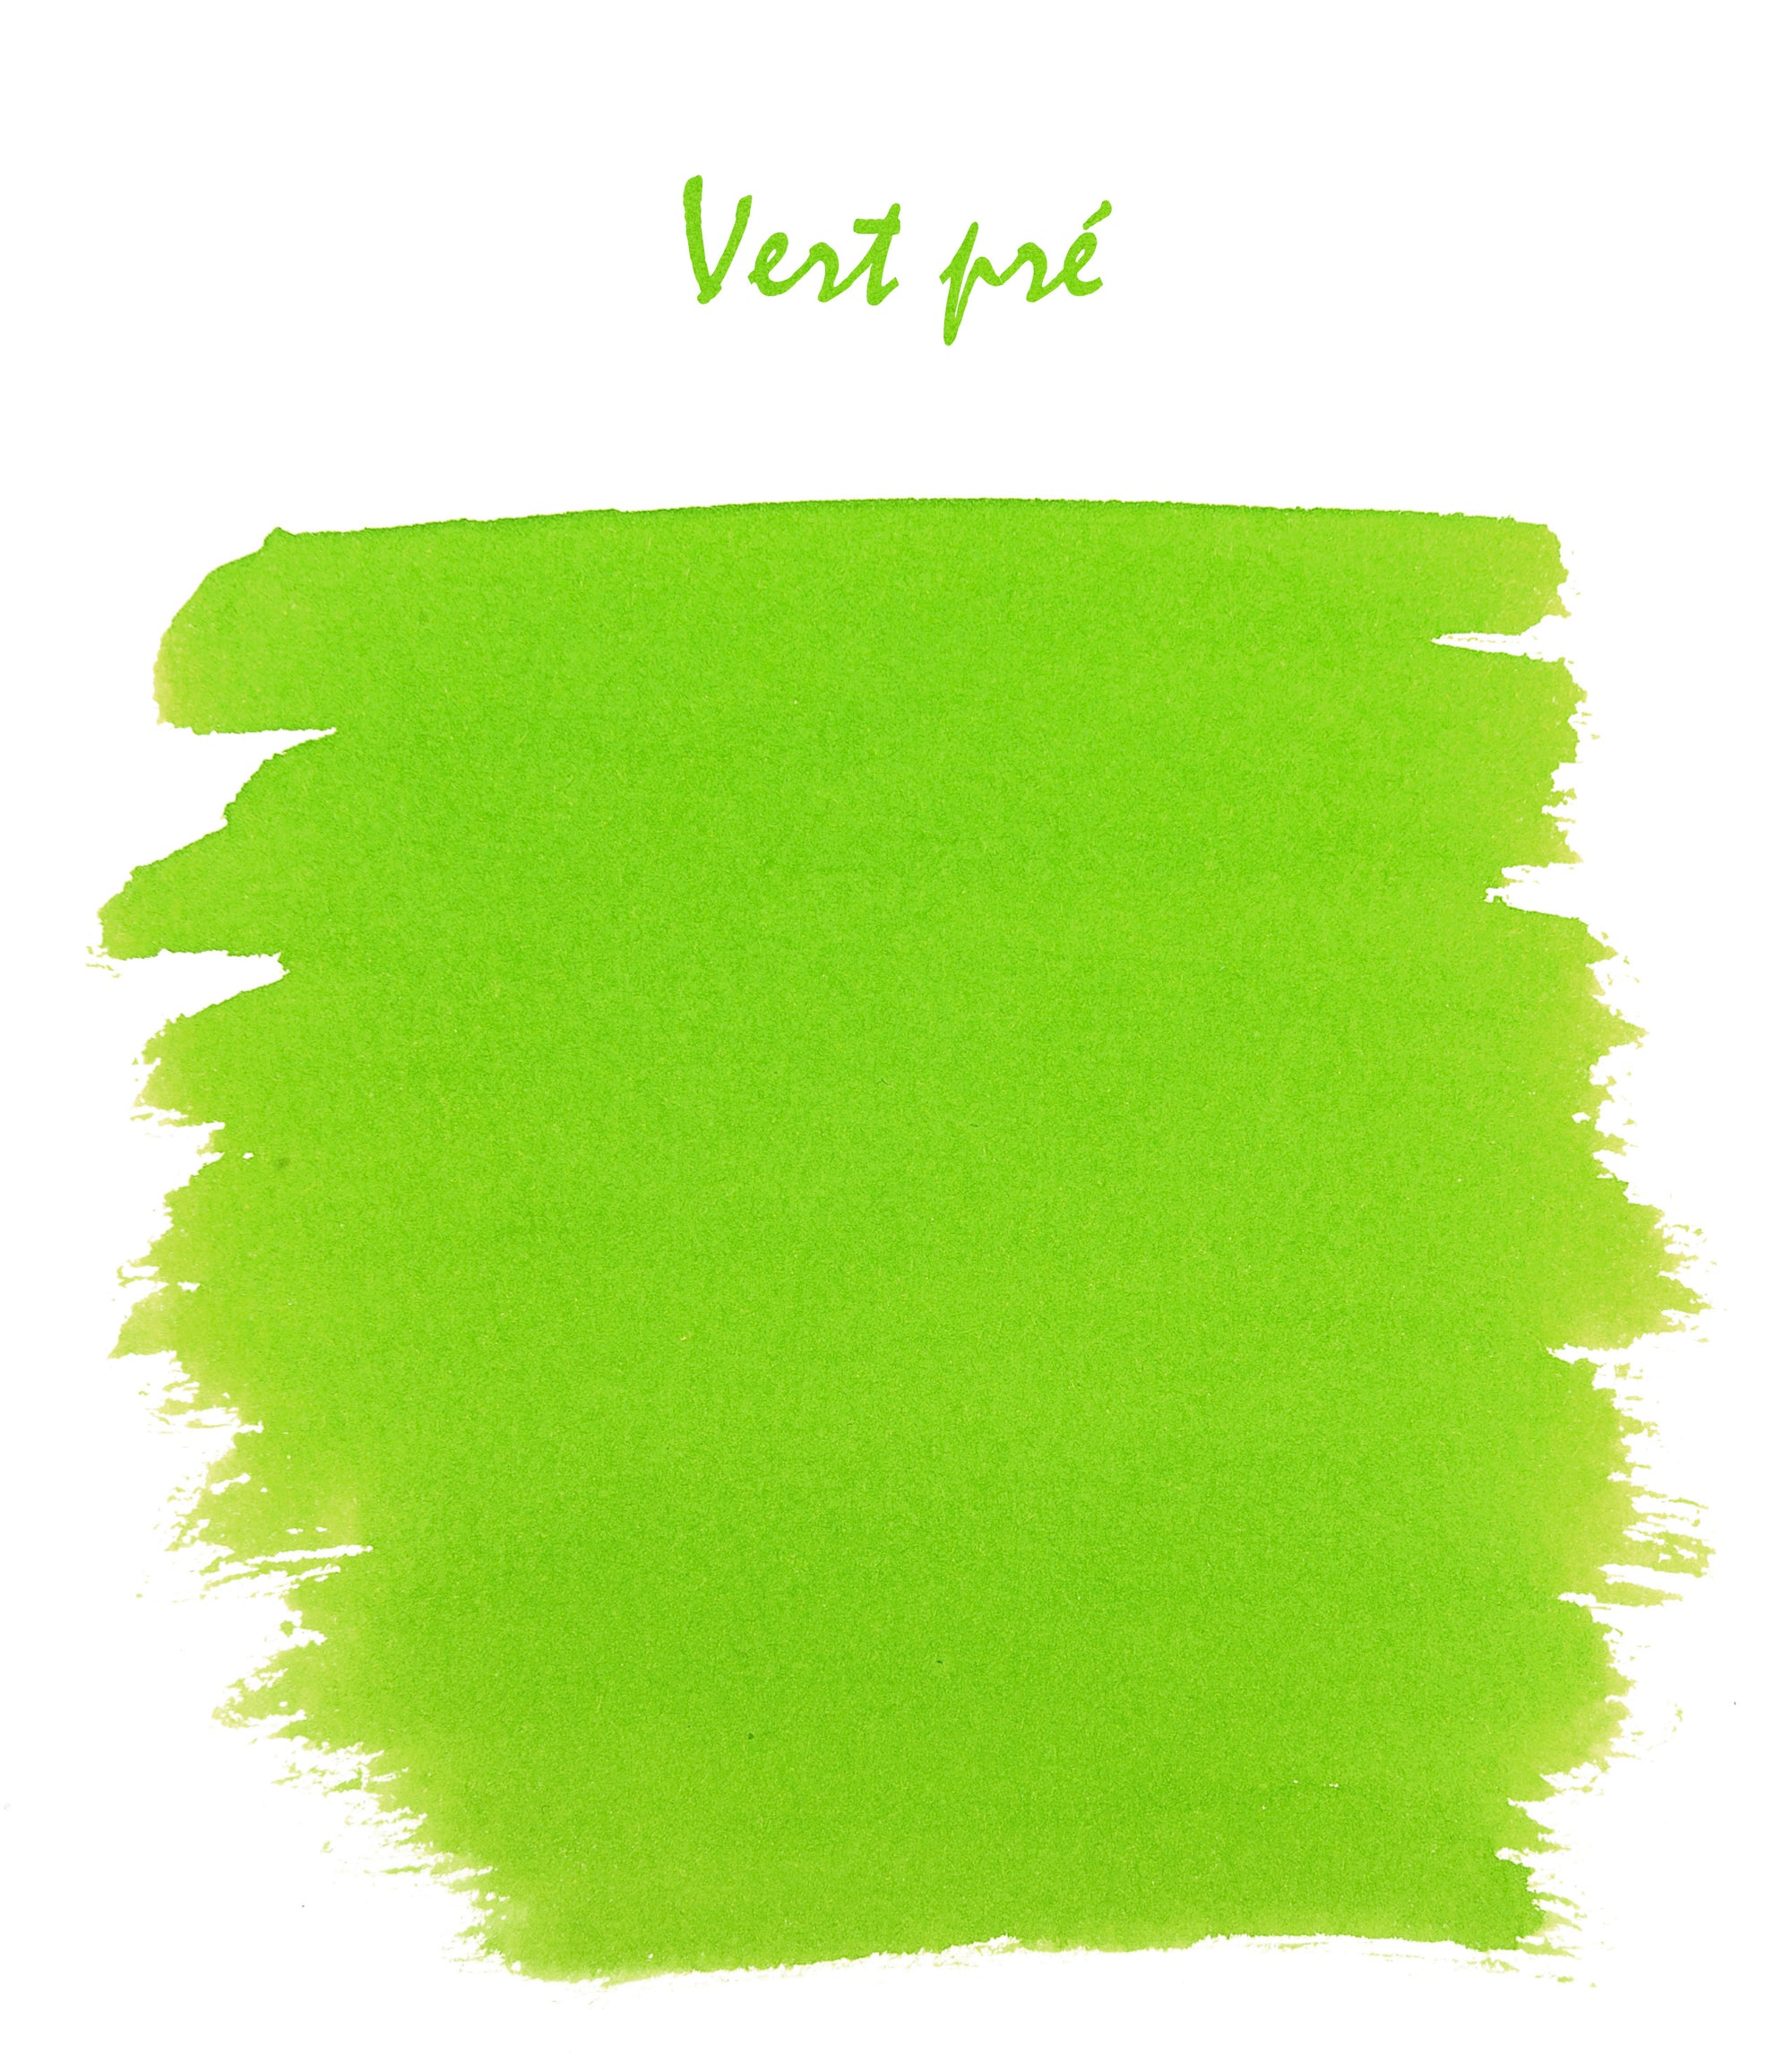 Herbin - Vert pre (kleegrün), 6 Patronen